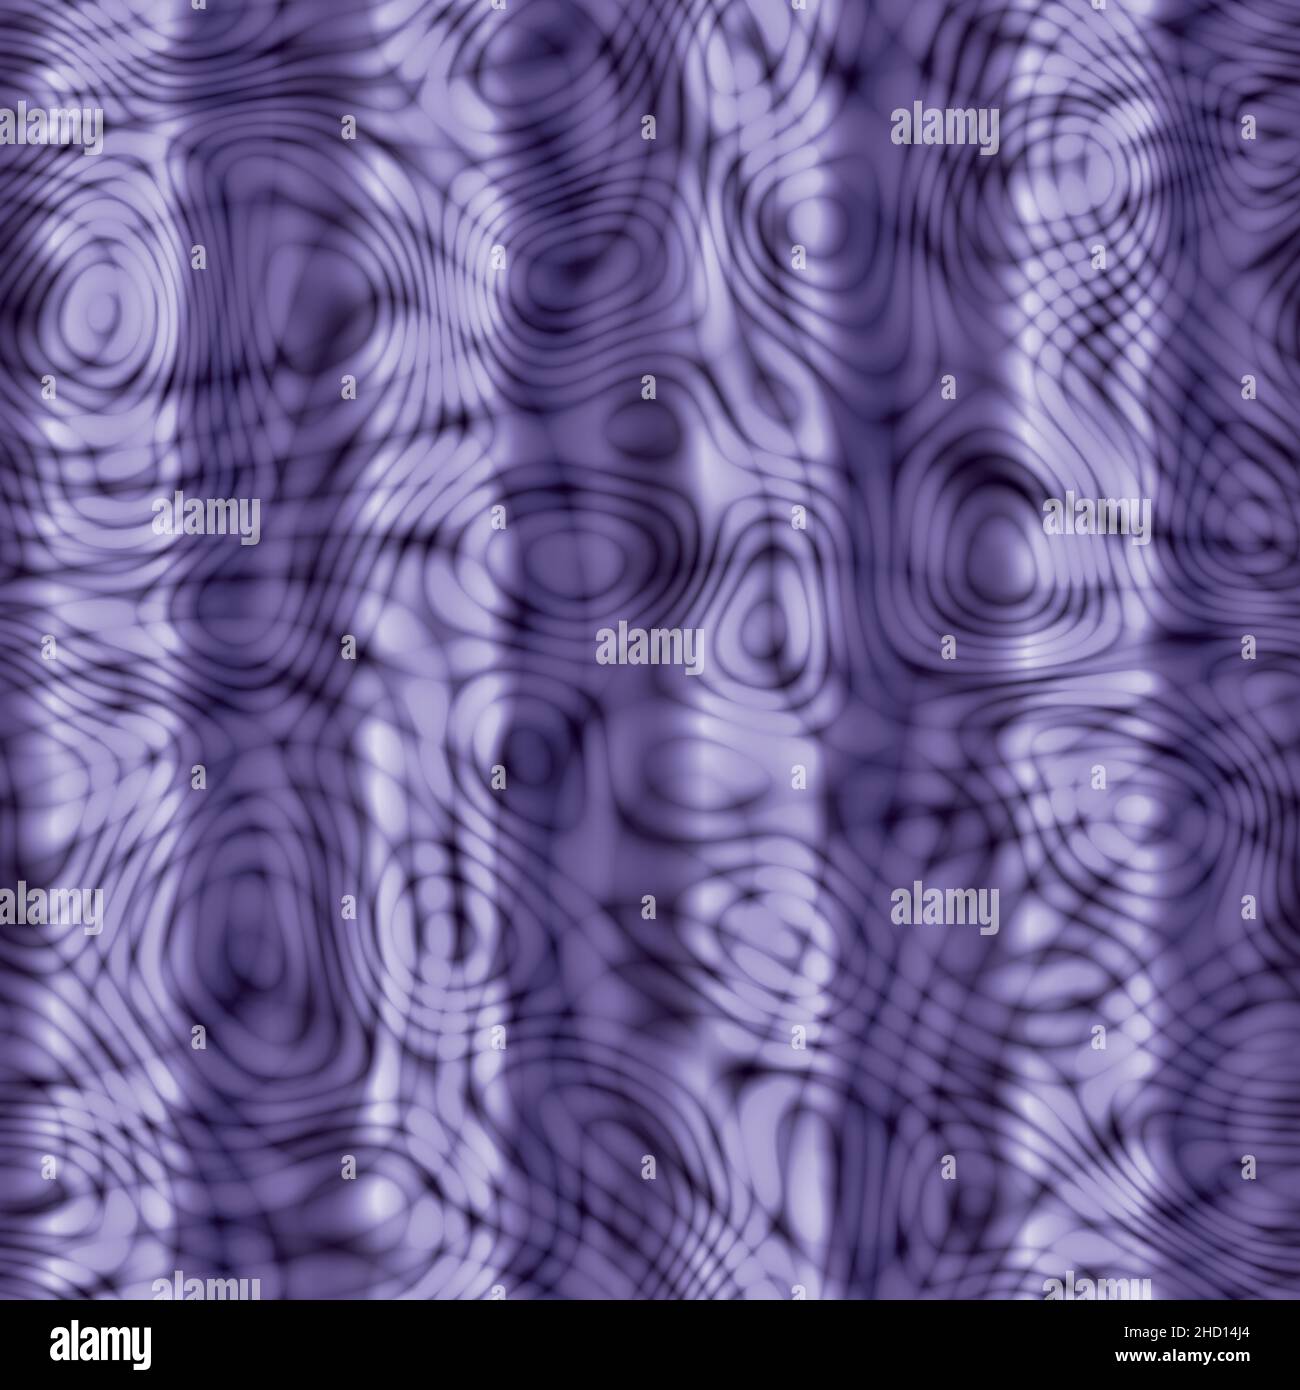 Retro Psychedelic Hypnotic Trippy Acid Swirls Seamless Texture Pattern Purple Lavender Lilac Stripes Stock Photo